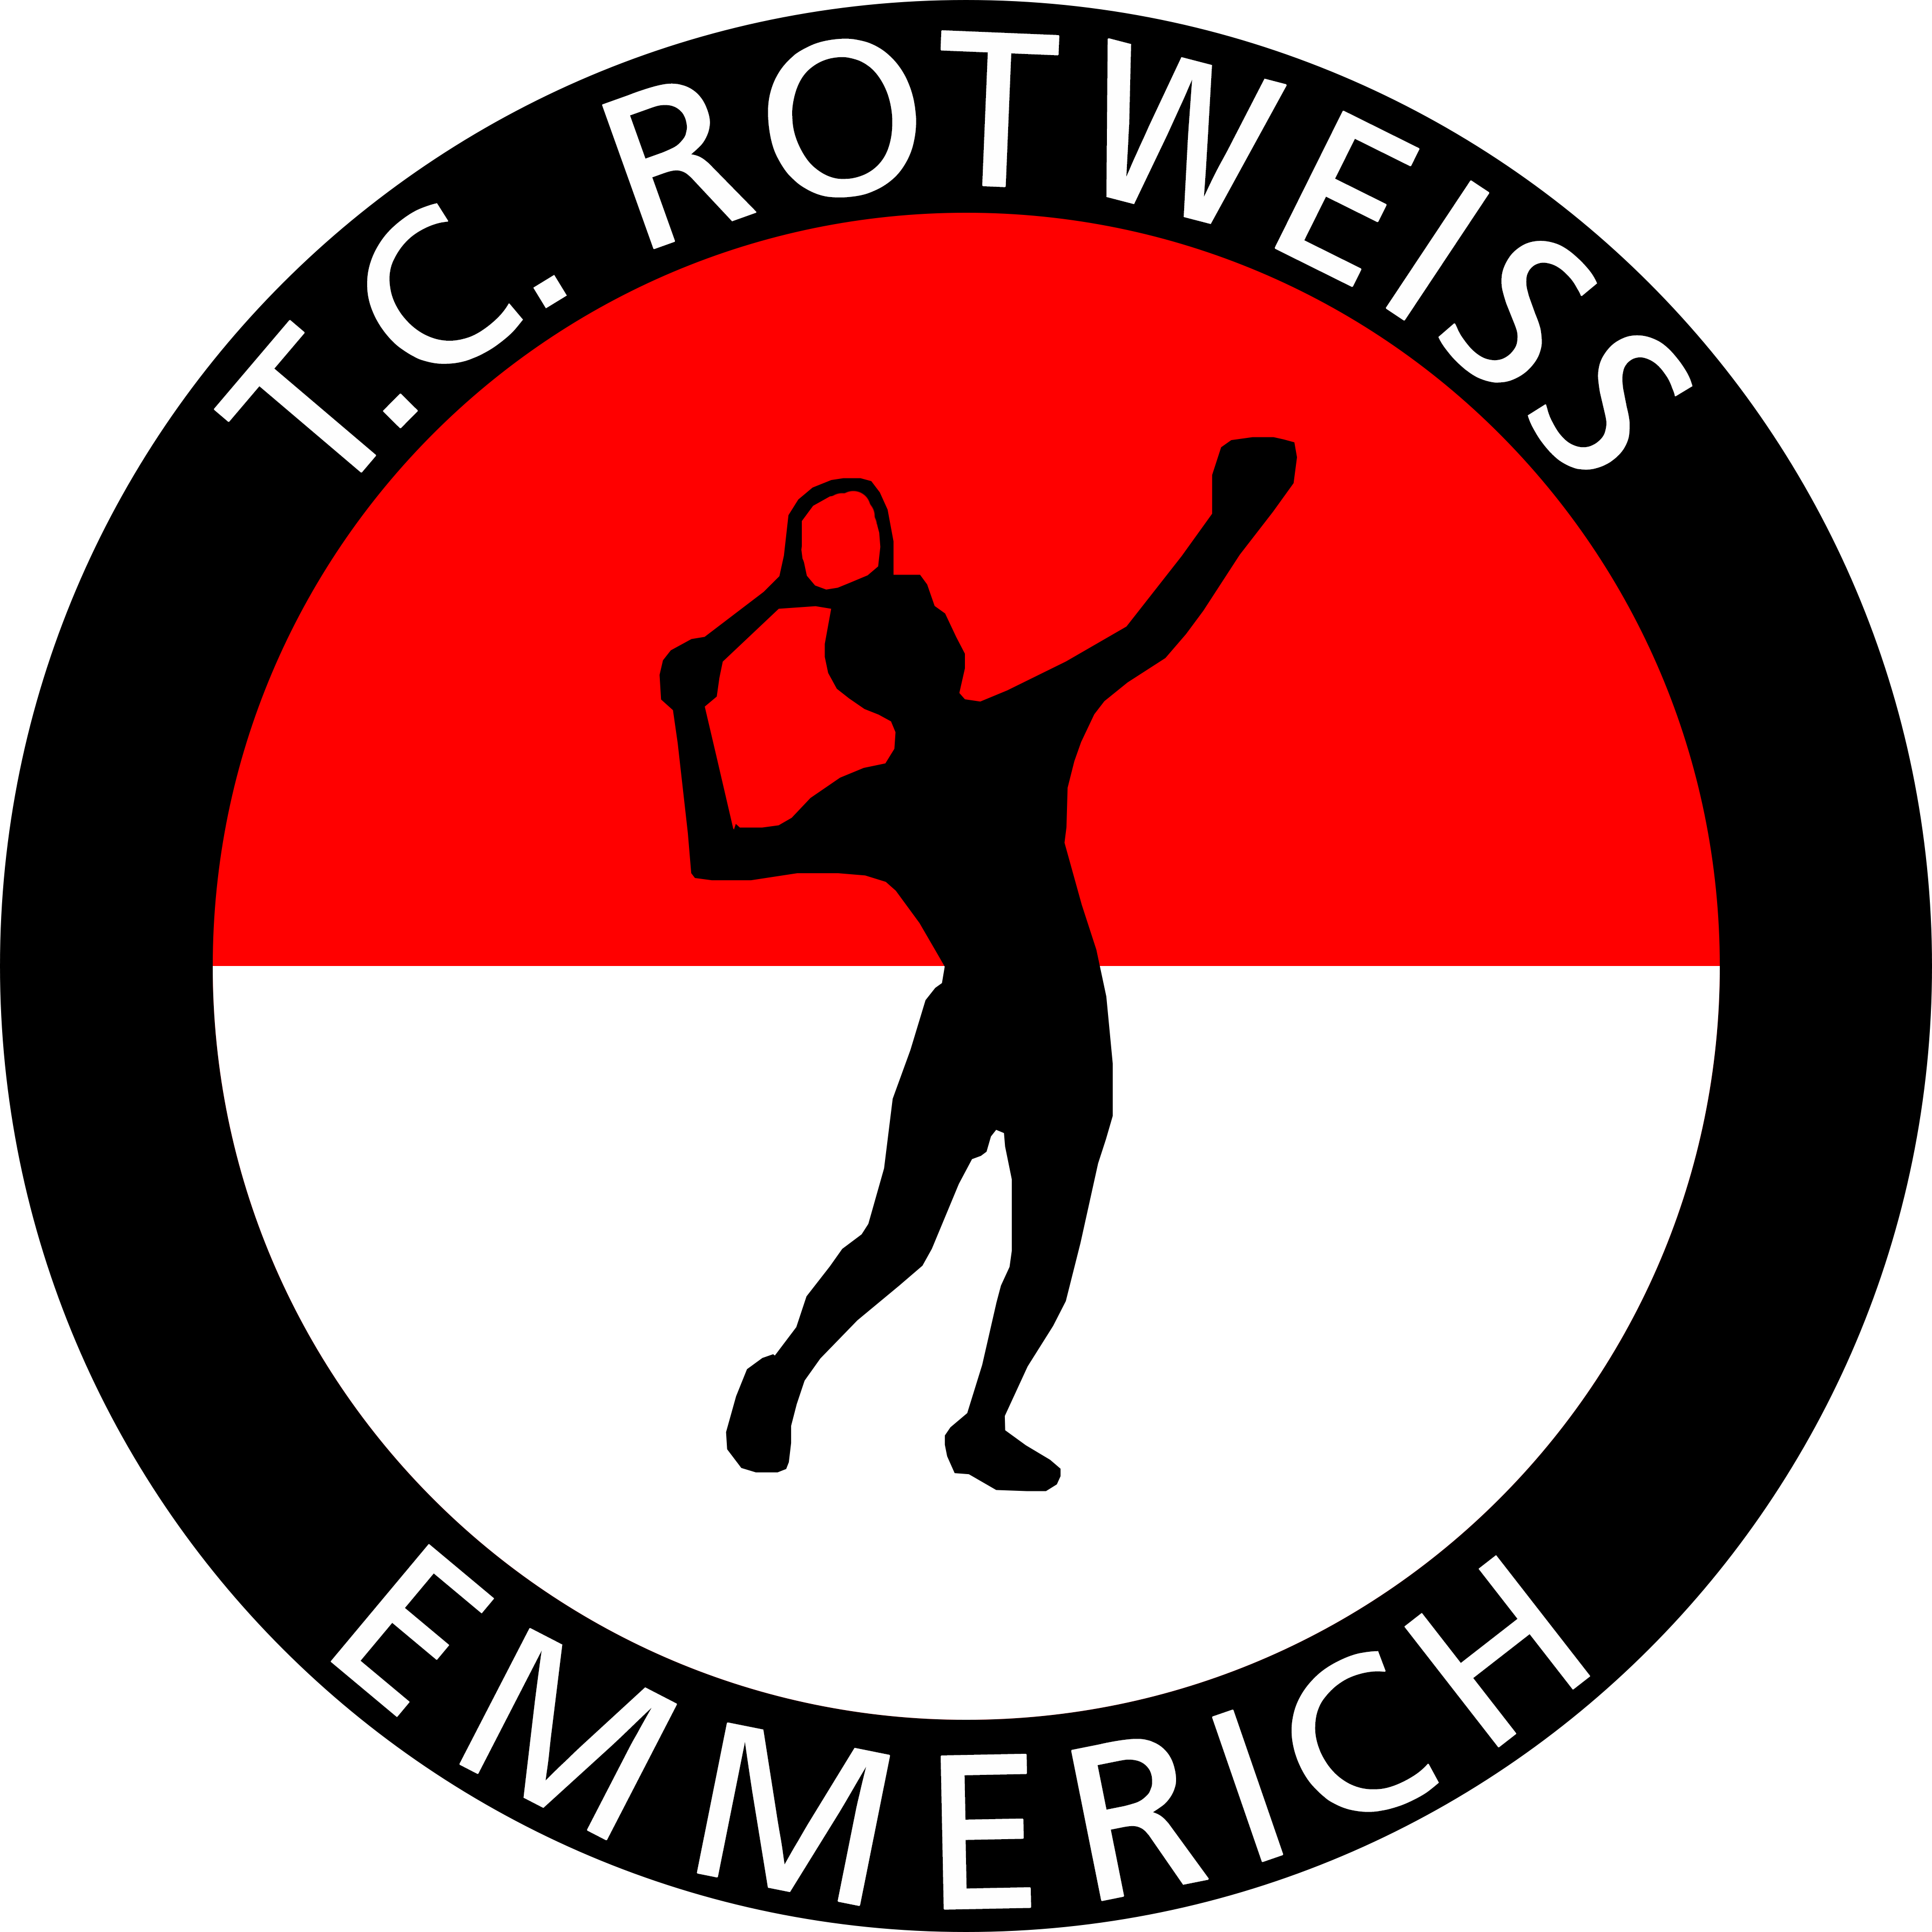 TC Rotweiss Emmerich e.V.